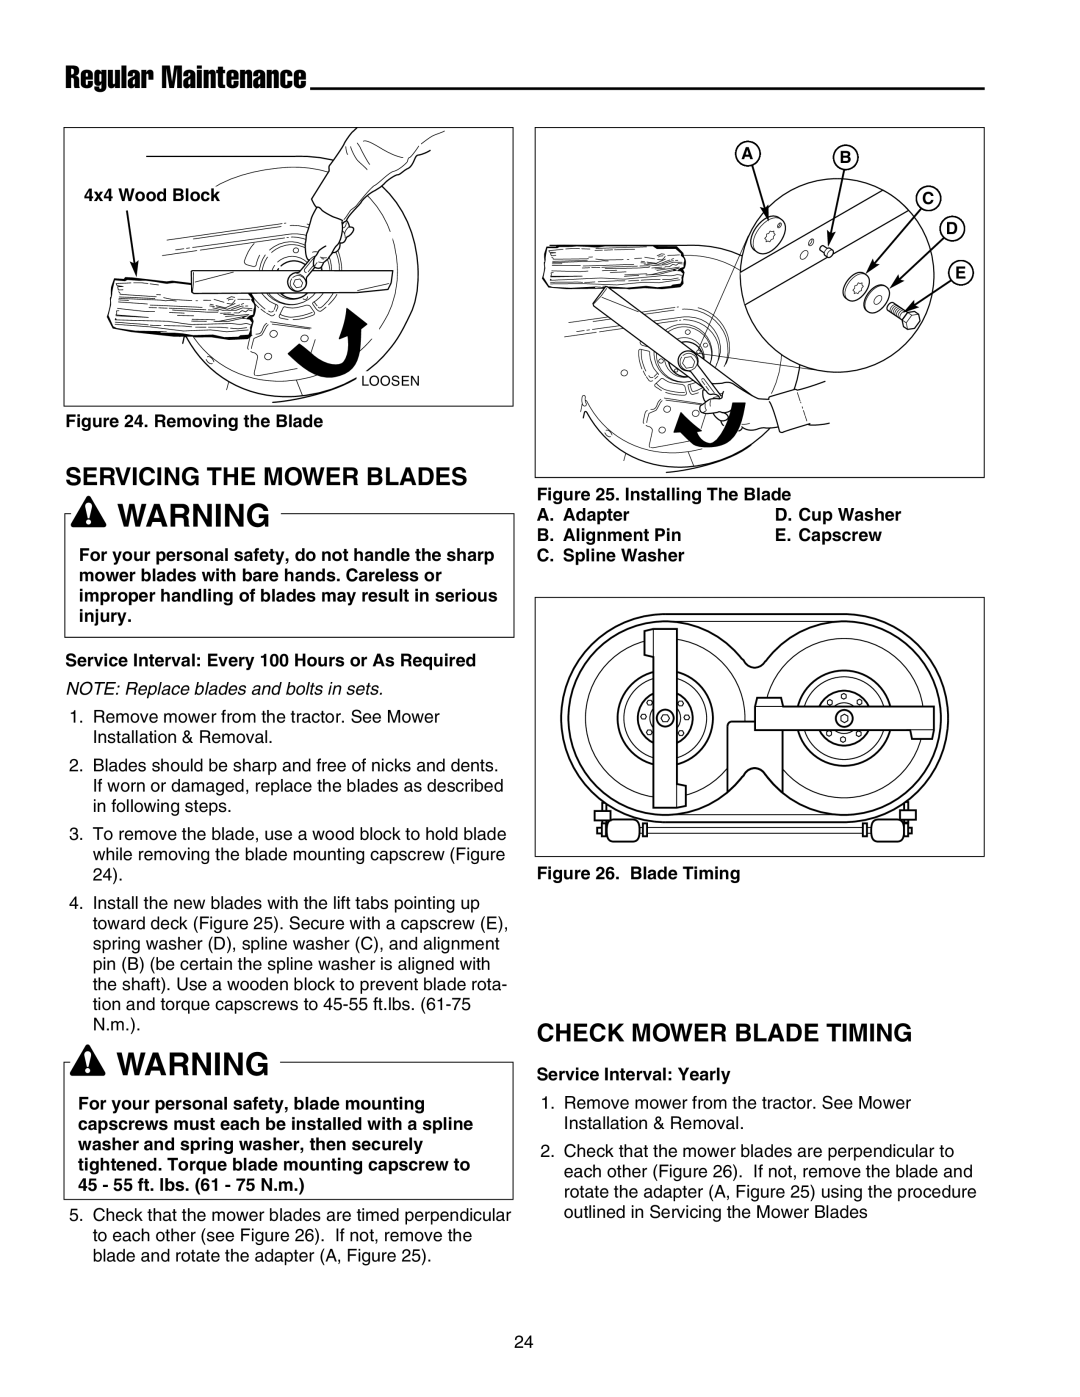 Snapper XL Series manual Servicing The Mower Blades, Check Mower Blade Timing, Regular Maintenance 